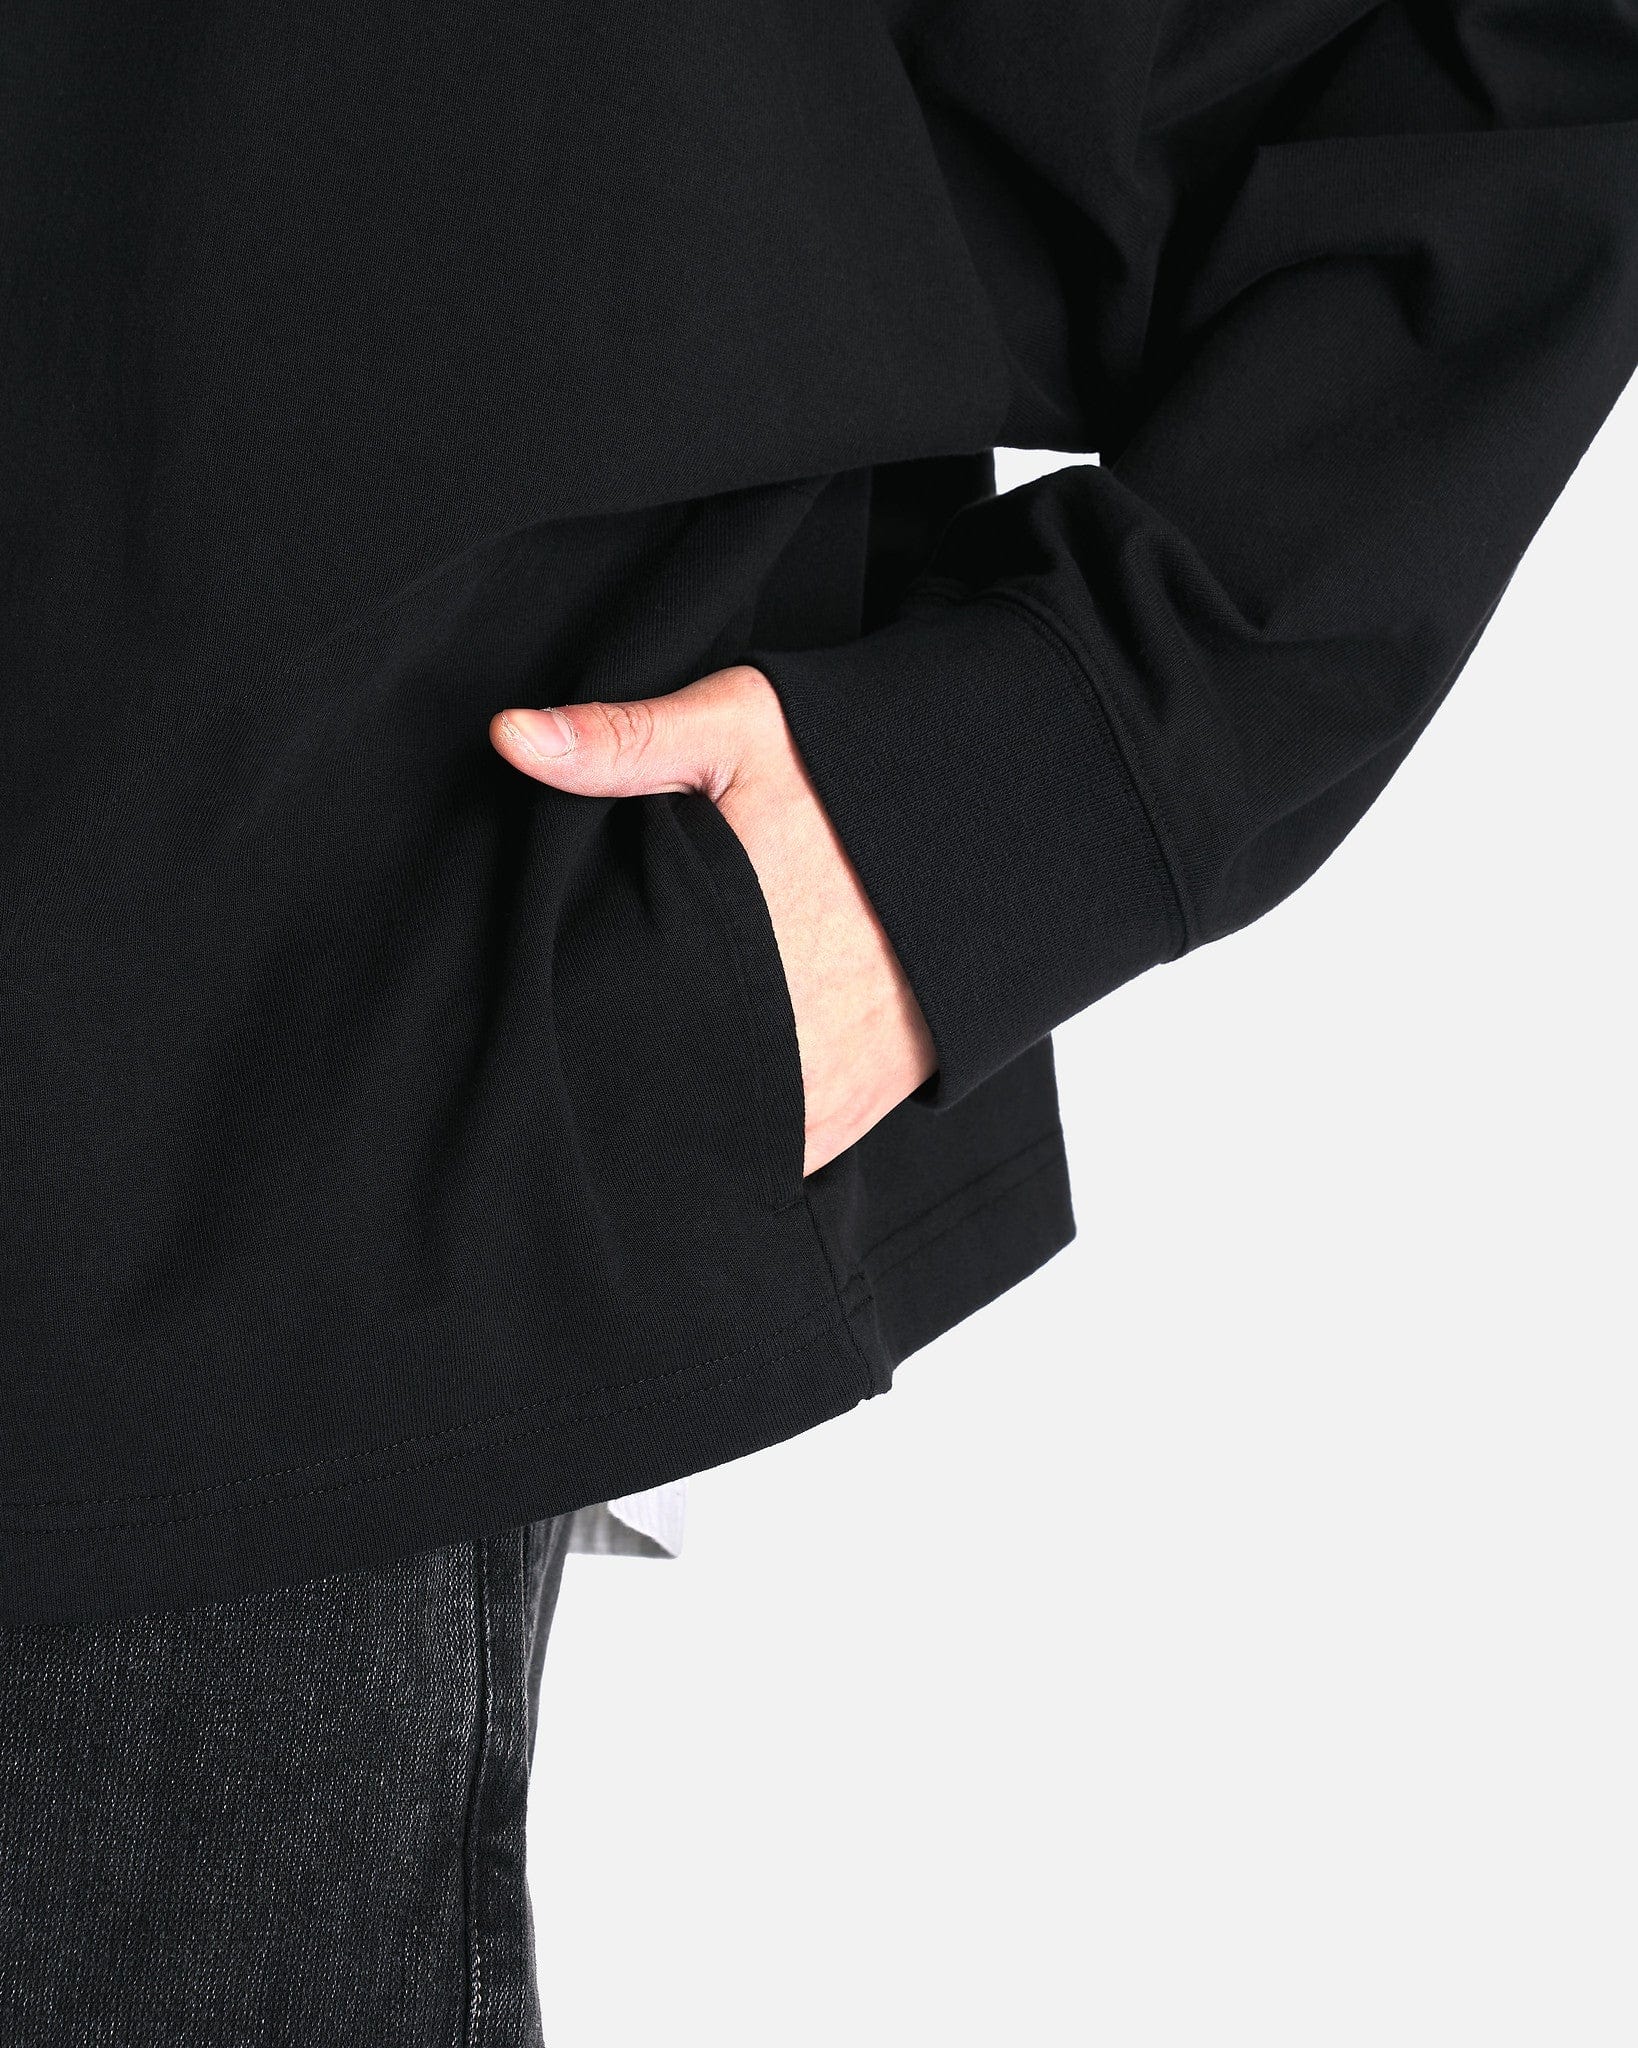 Acne Studios Men's Sweatshirts Graphic Print Hooded Sweater in Black